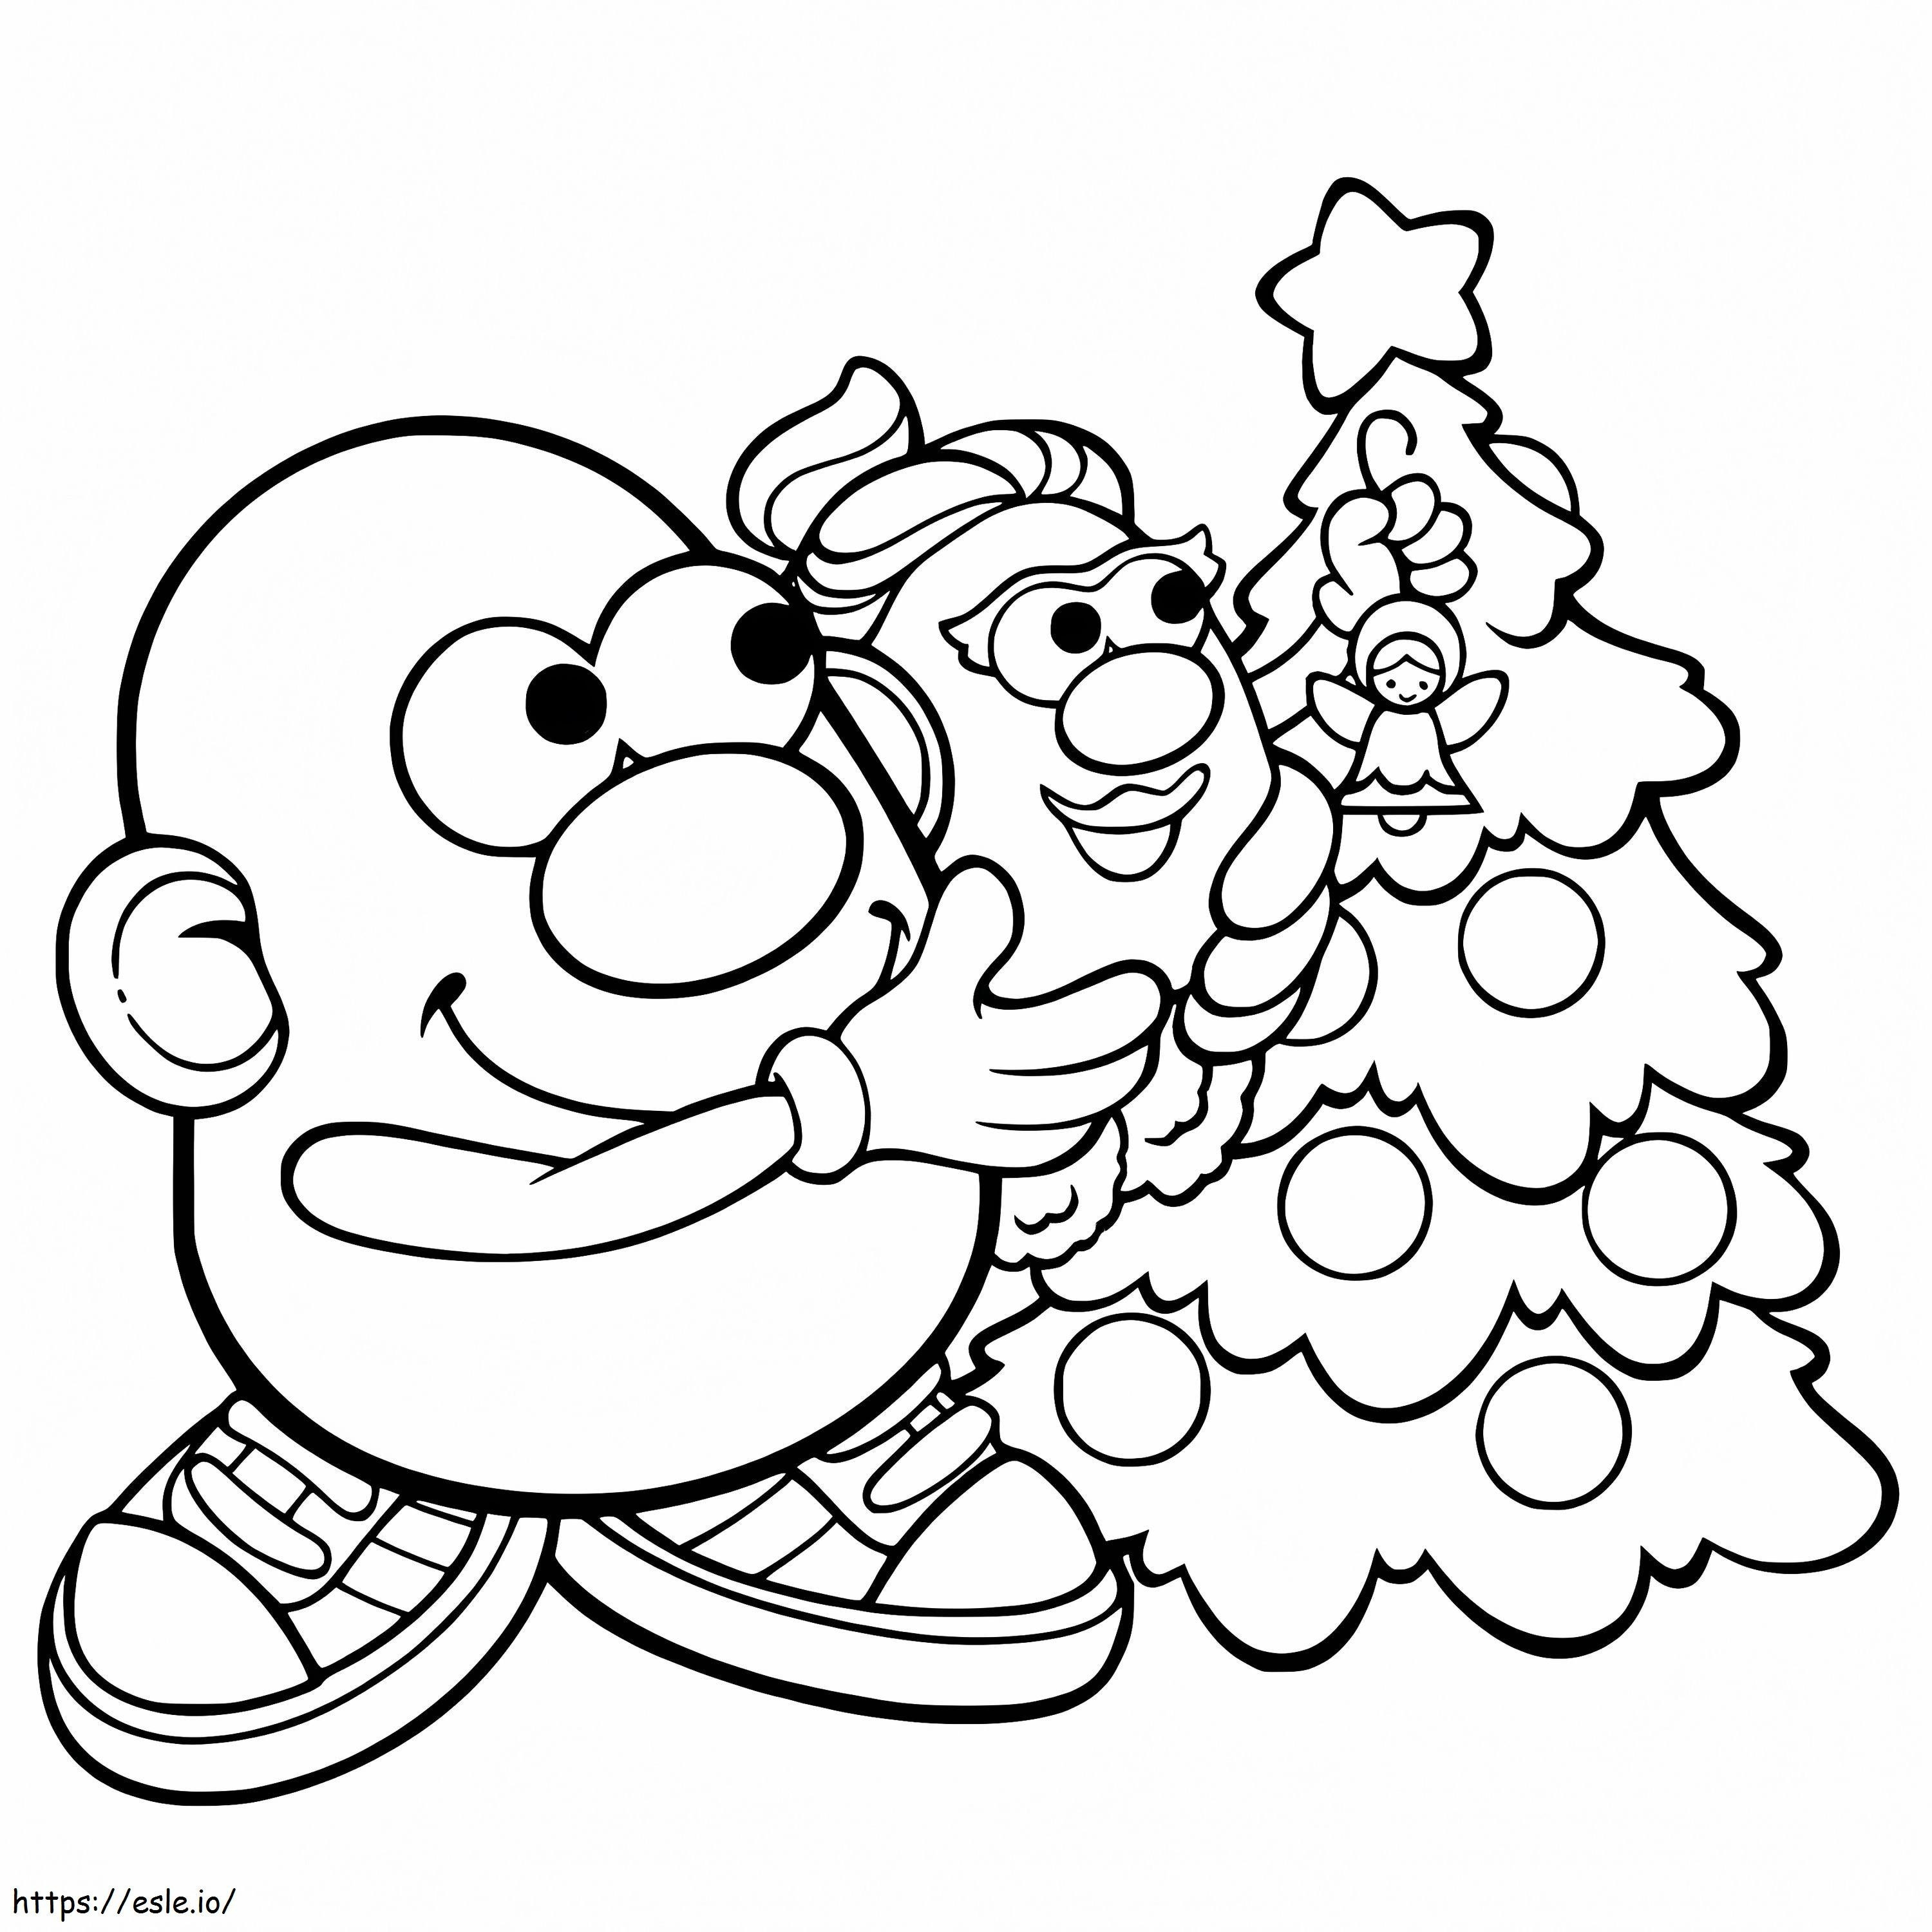 Mr. Potato Head On Christmas coloring page